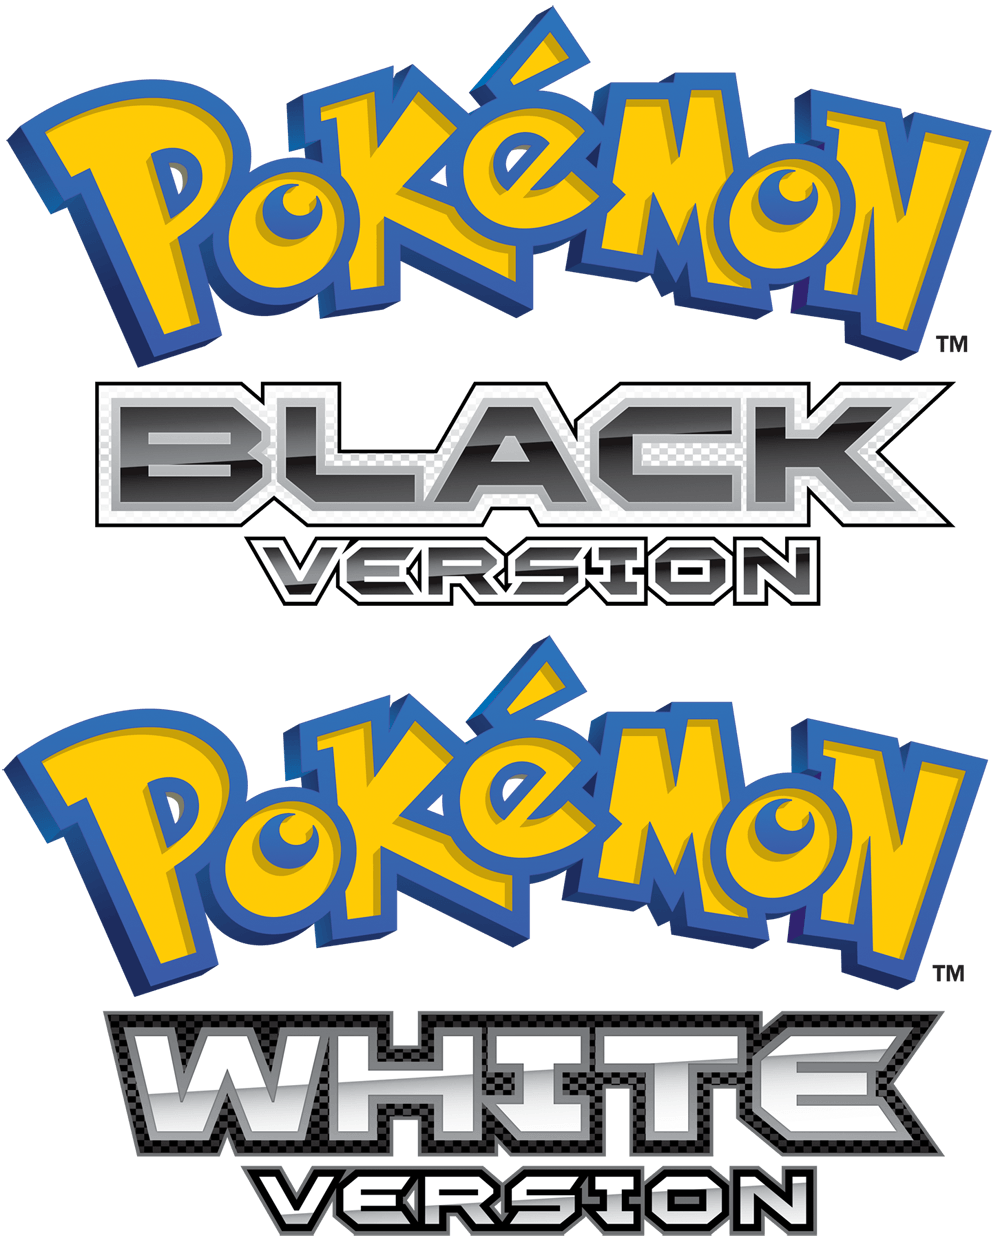 Pokemon Black and White Logo - 5th Gen Logos A No Go? PokéCommunity Forums